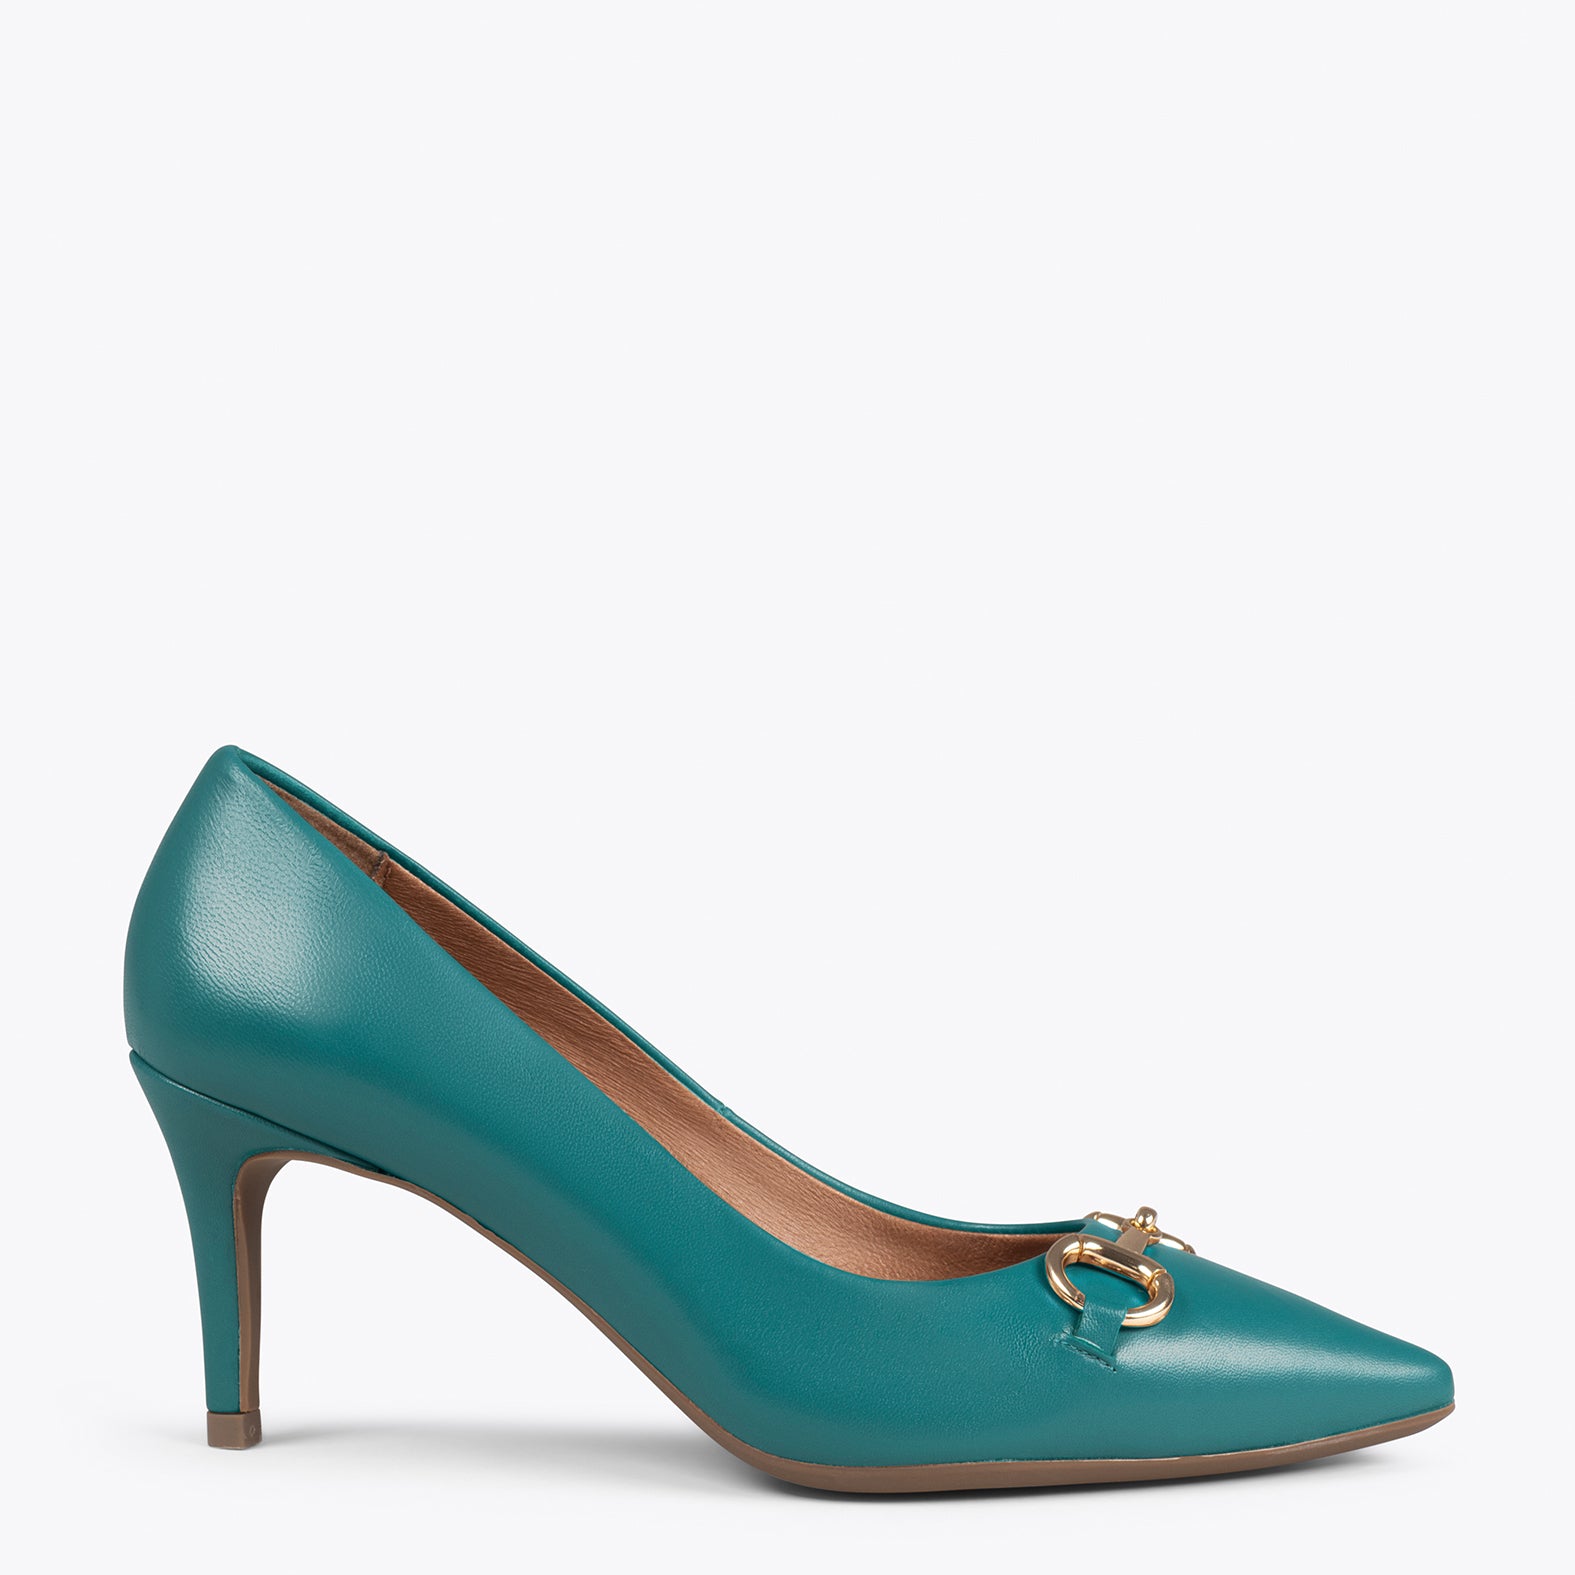 ELEGANCE – GREEN stiletto heel with metallic detail